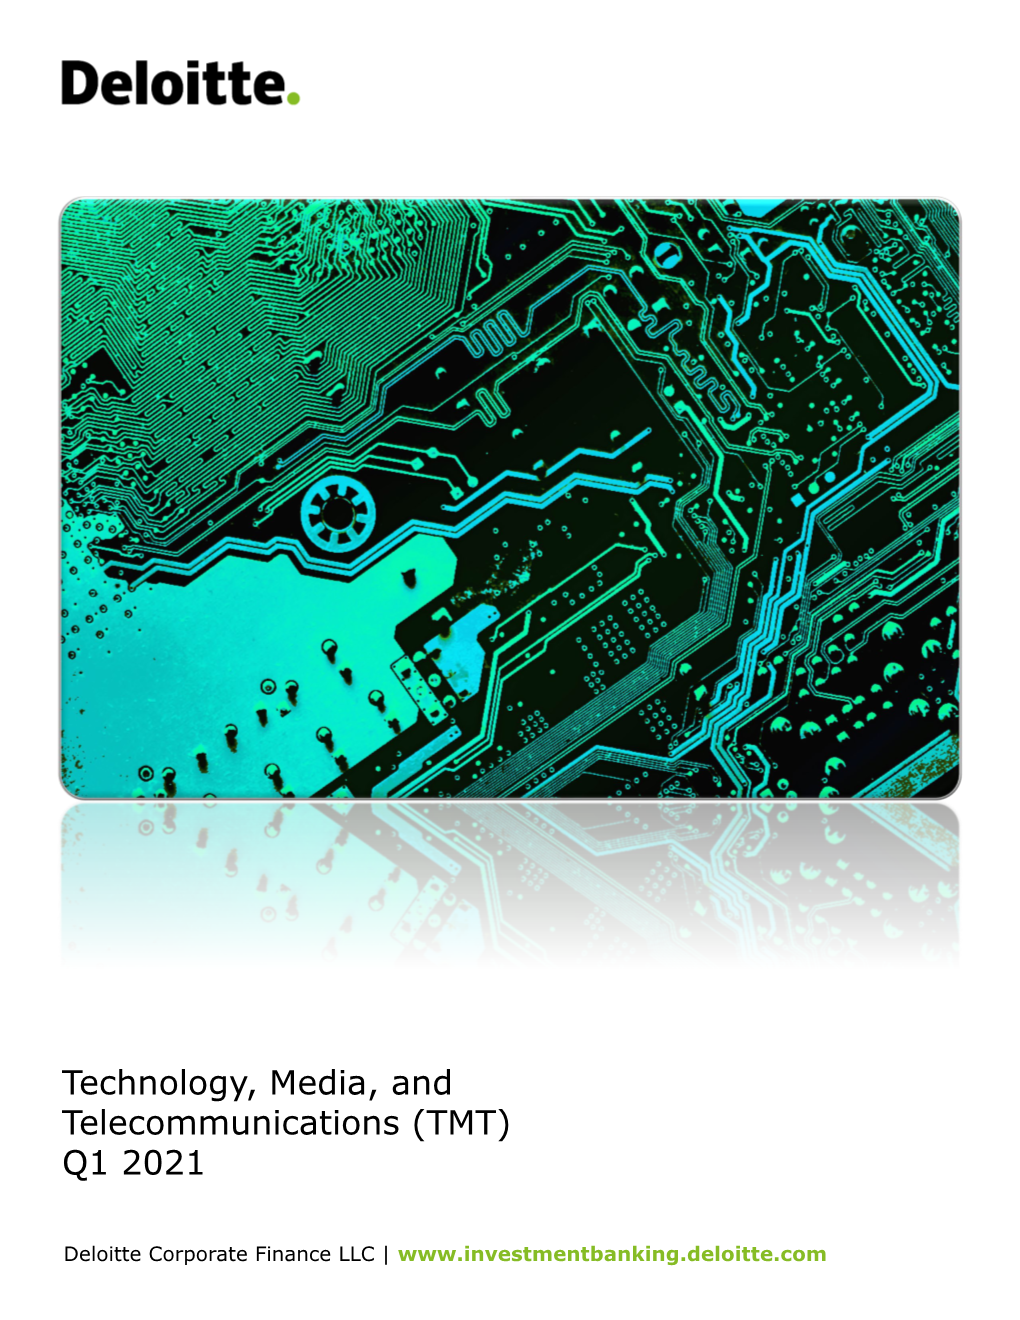 Technology, Media, and Telecommunications (TMT) Q1 2021